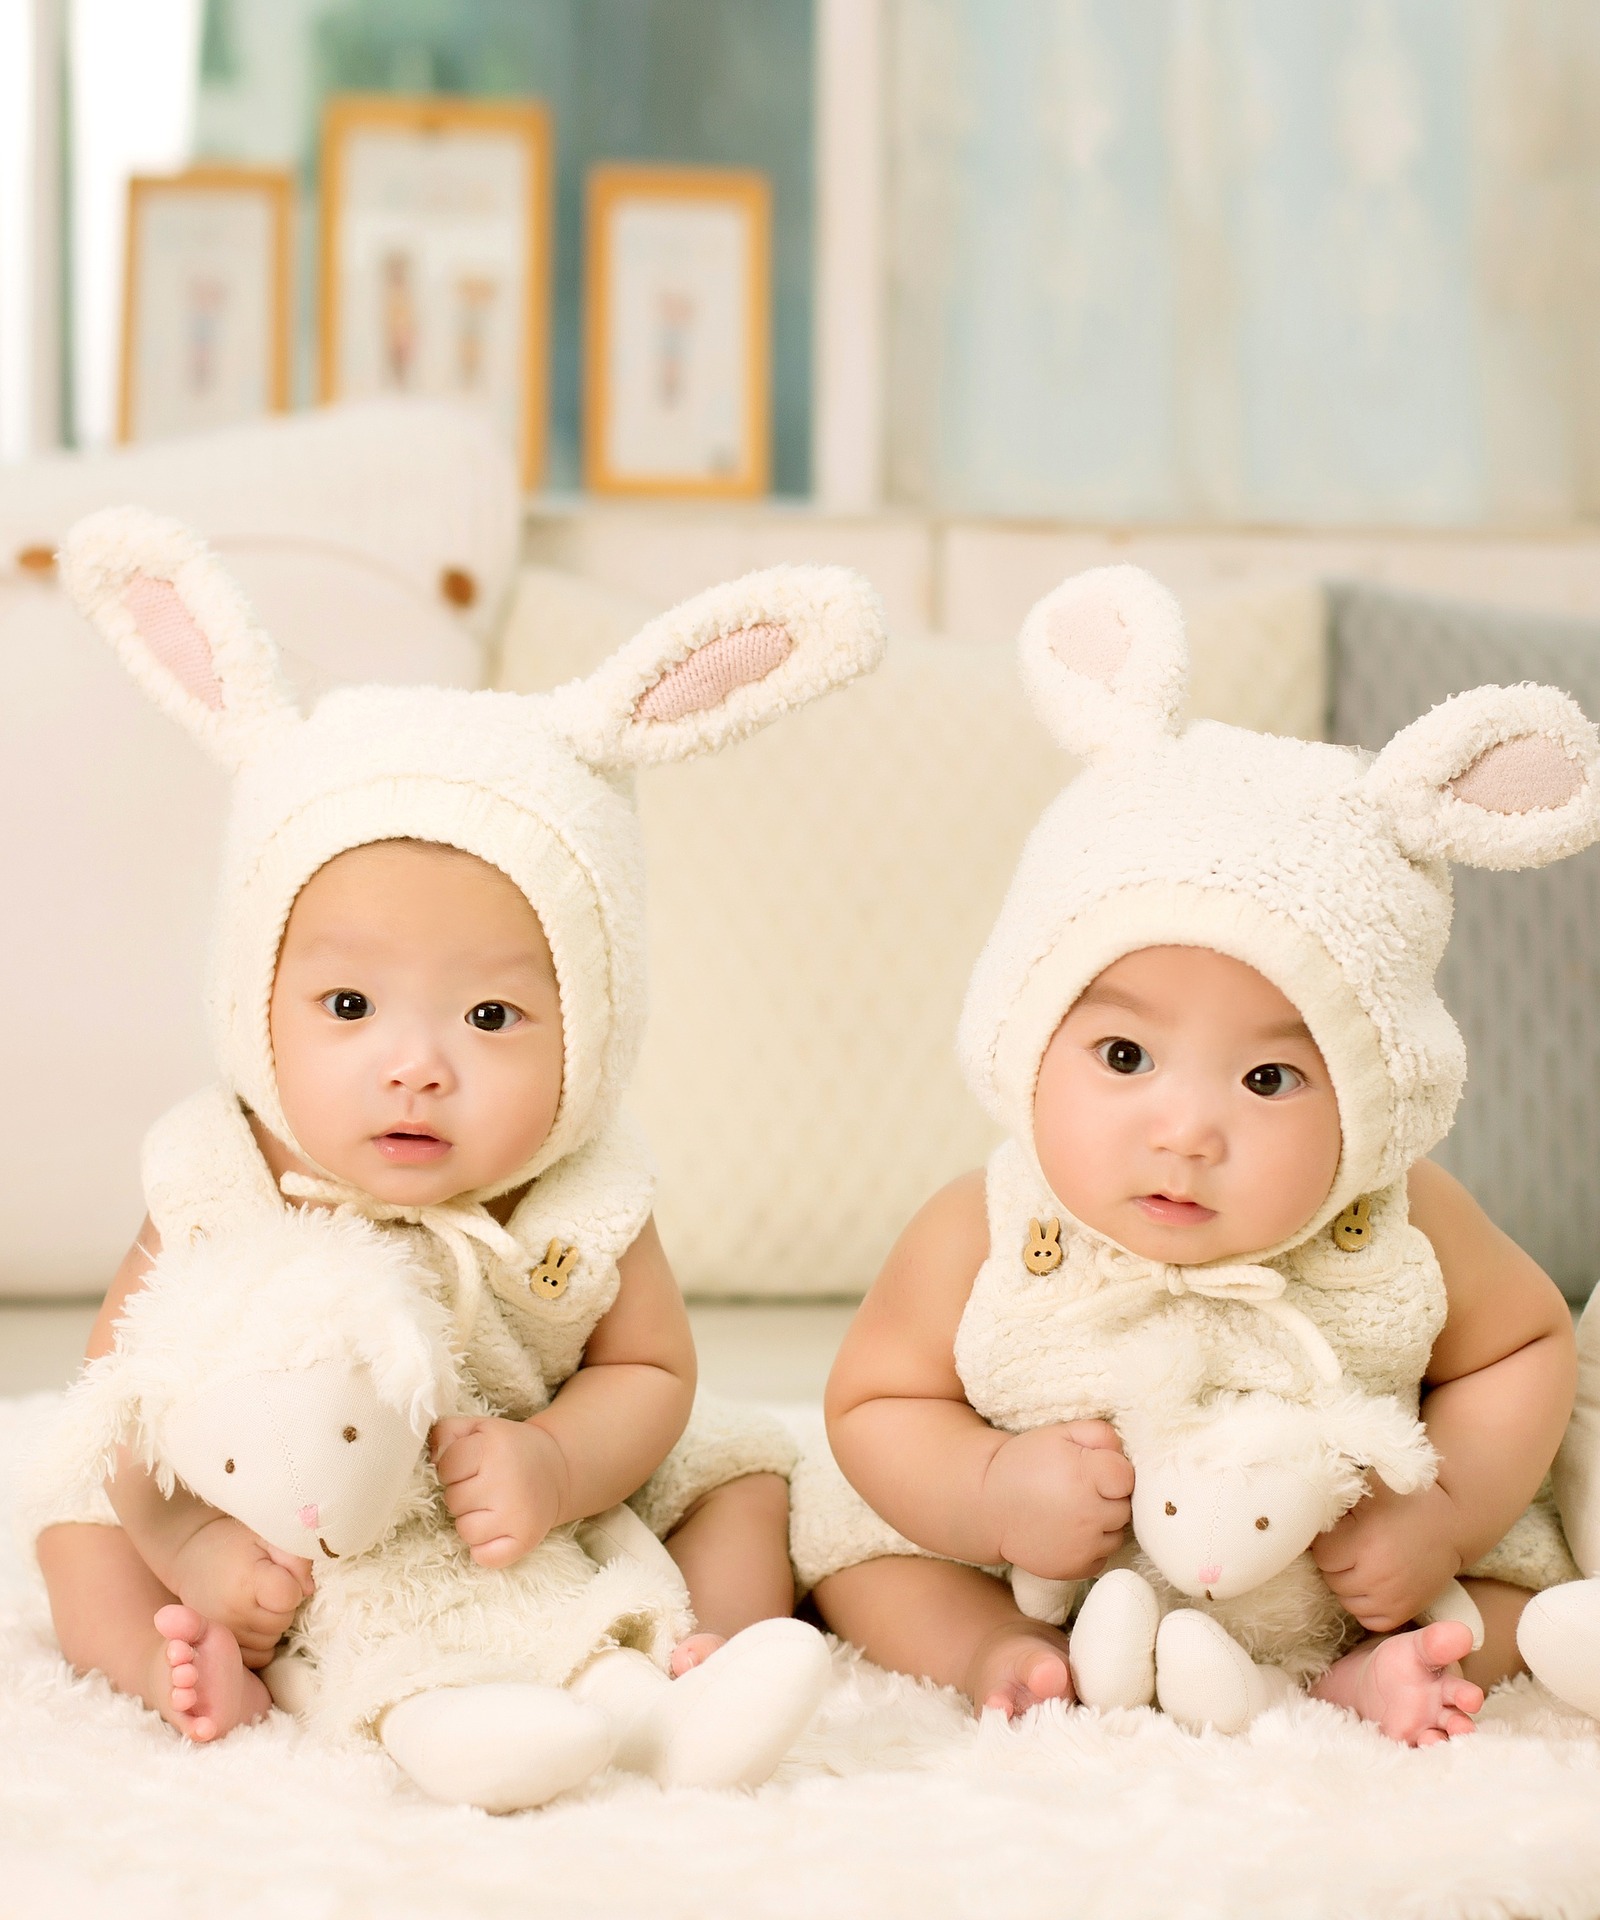 Two babies dressed as bunnies